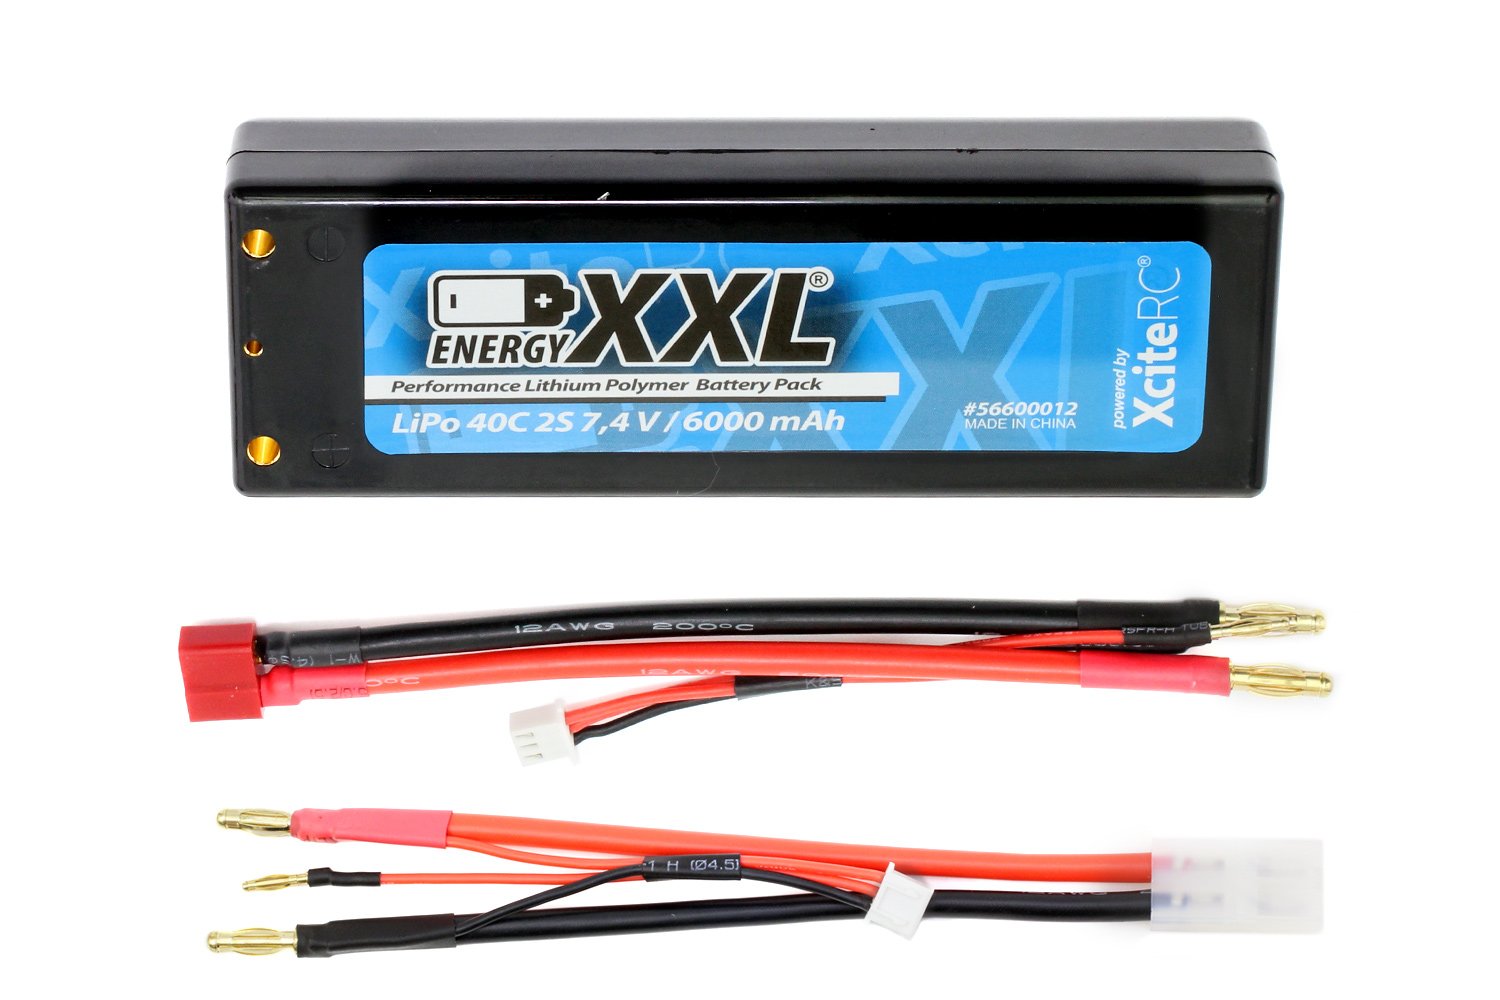 XciteRC 56600012 - Energy XXL Performance Lipo Batterie Pack 40C 2S - Hardcase, 4 mm Goldplugs, T und JST Adapterkabel, 7.4 V, 6000 mAh